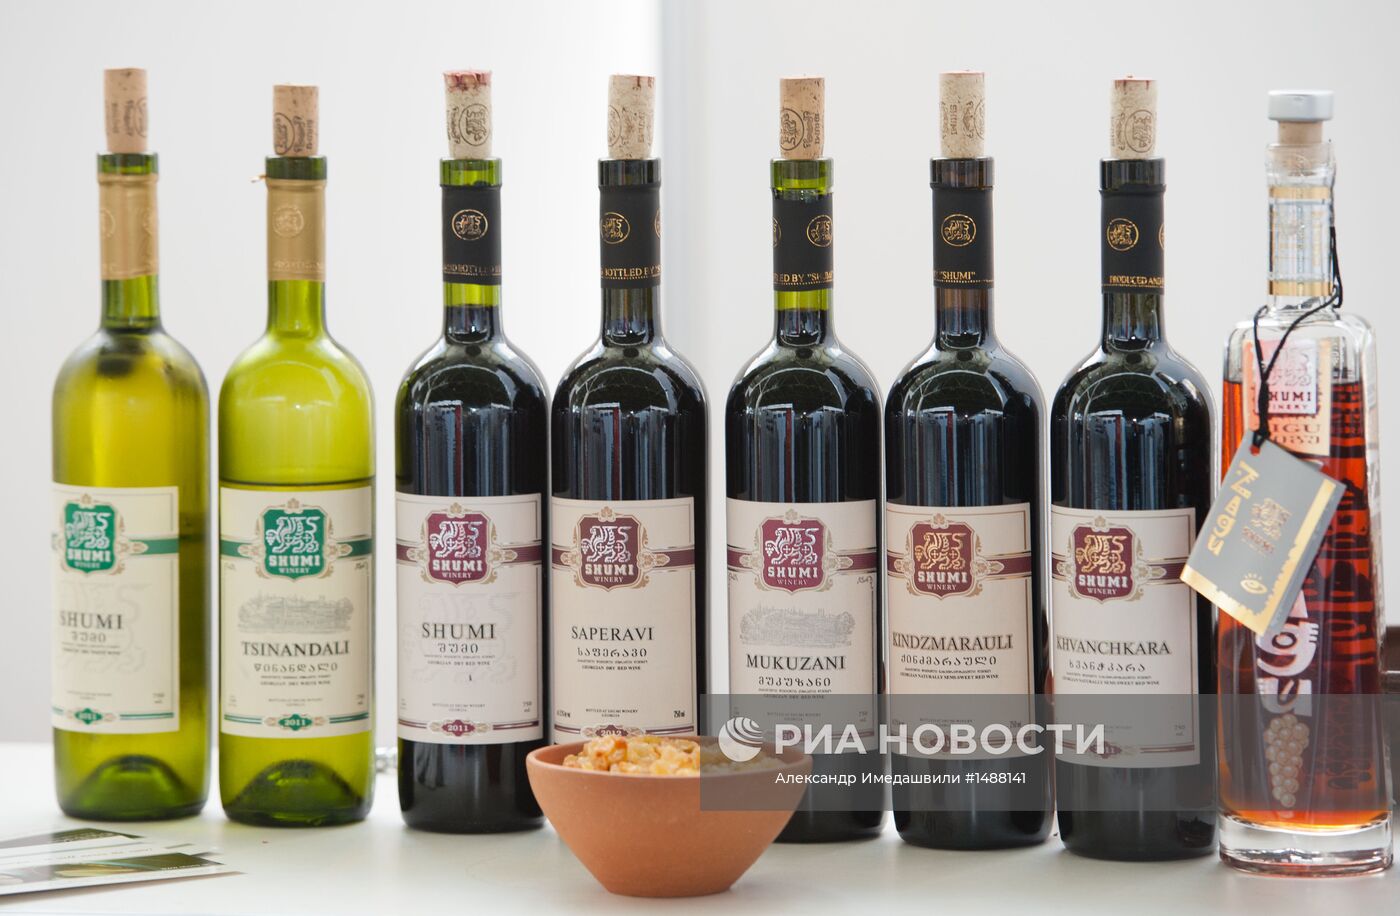 Выставка вин WinExpo Georgia 2013 в Тбилиси